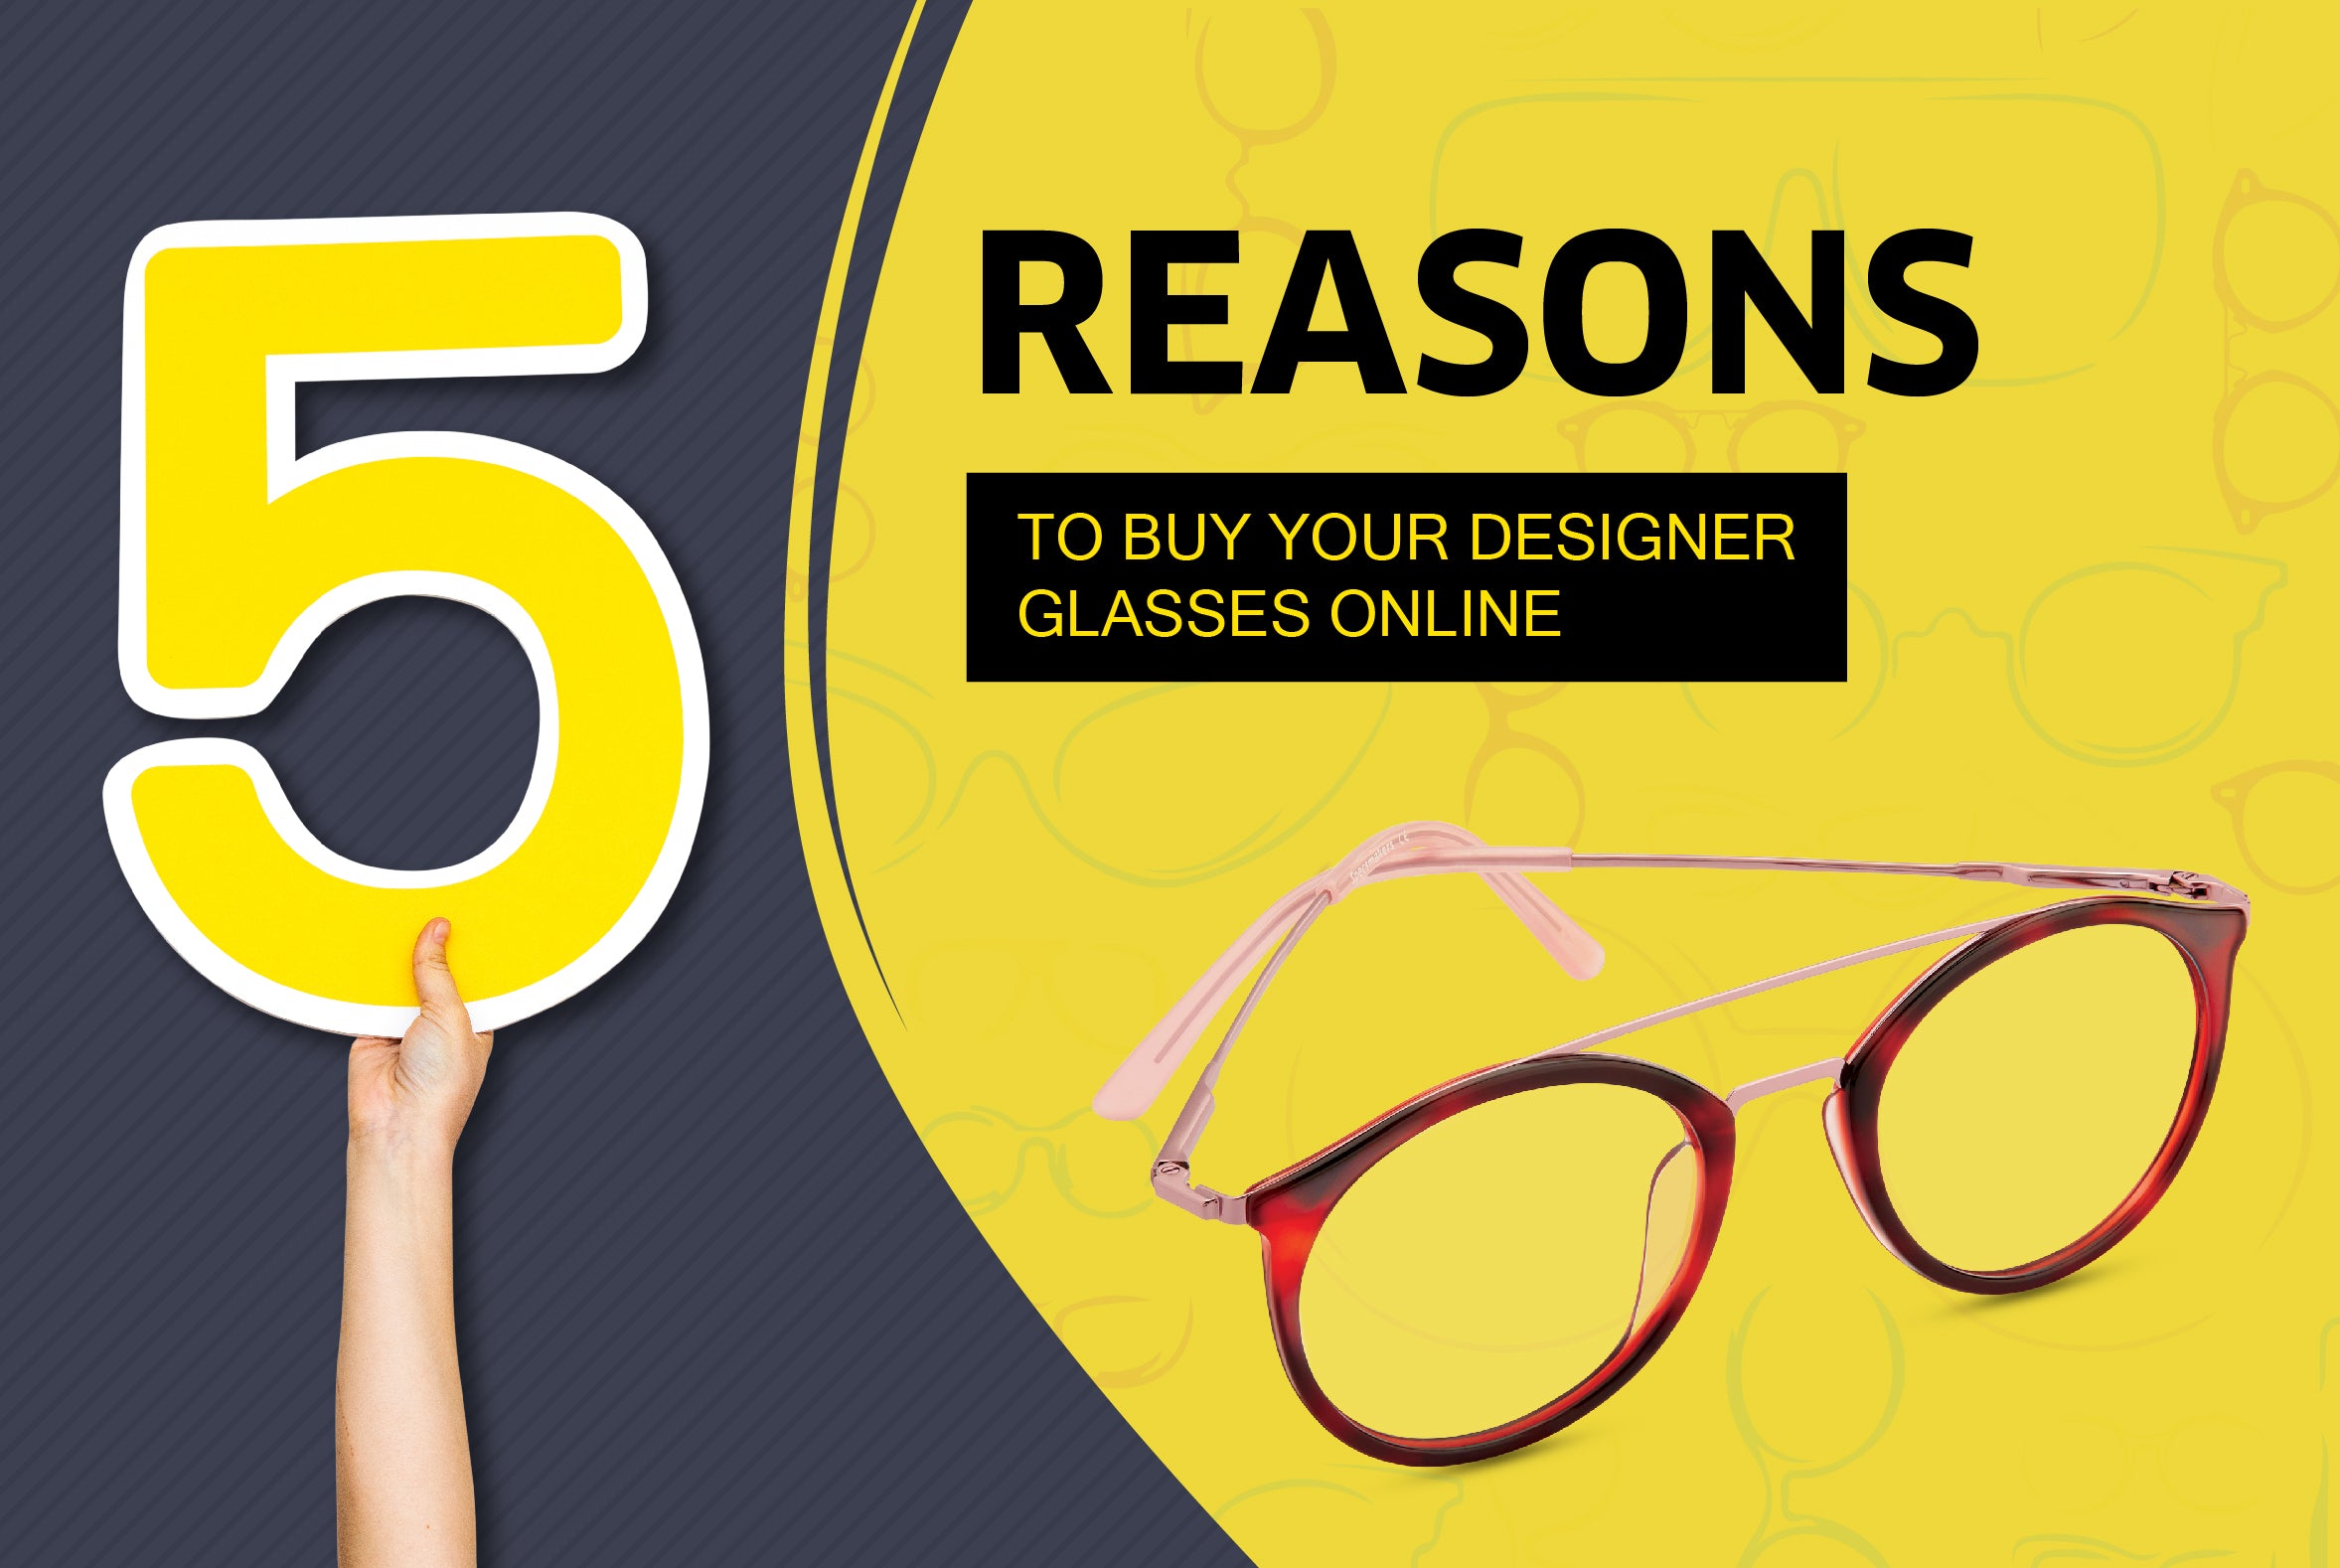 Buy SPECSMAKERS Happster Black Rectangular Unisex Eyeglass Frame (51mm -  Medium) at Amazon.in